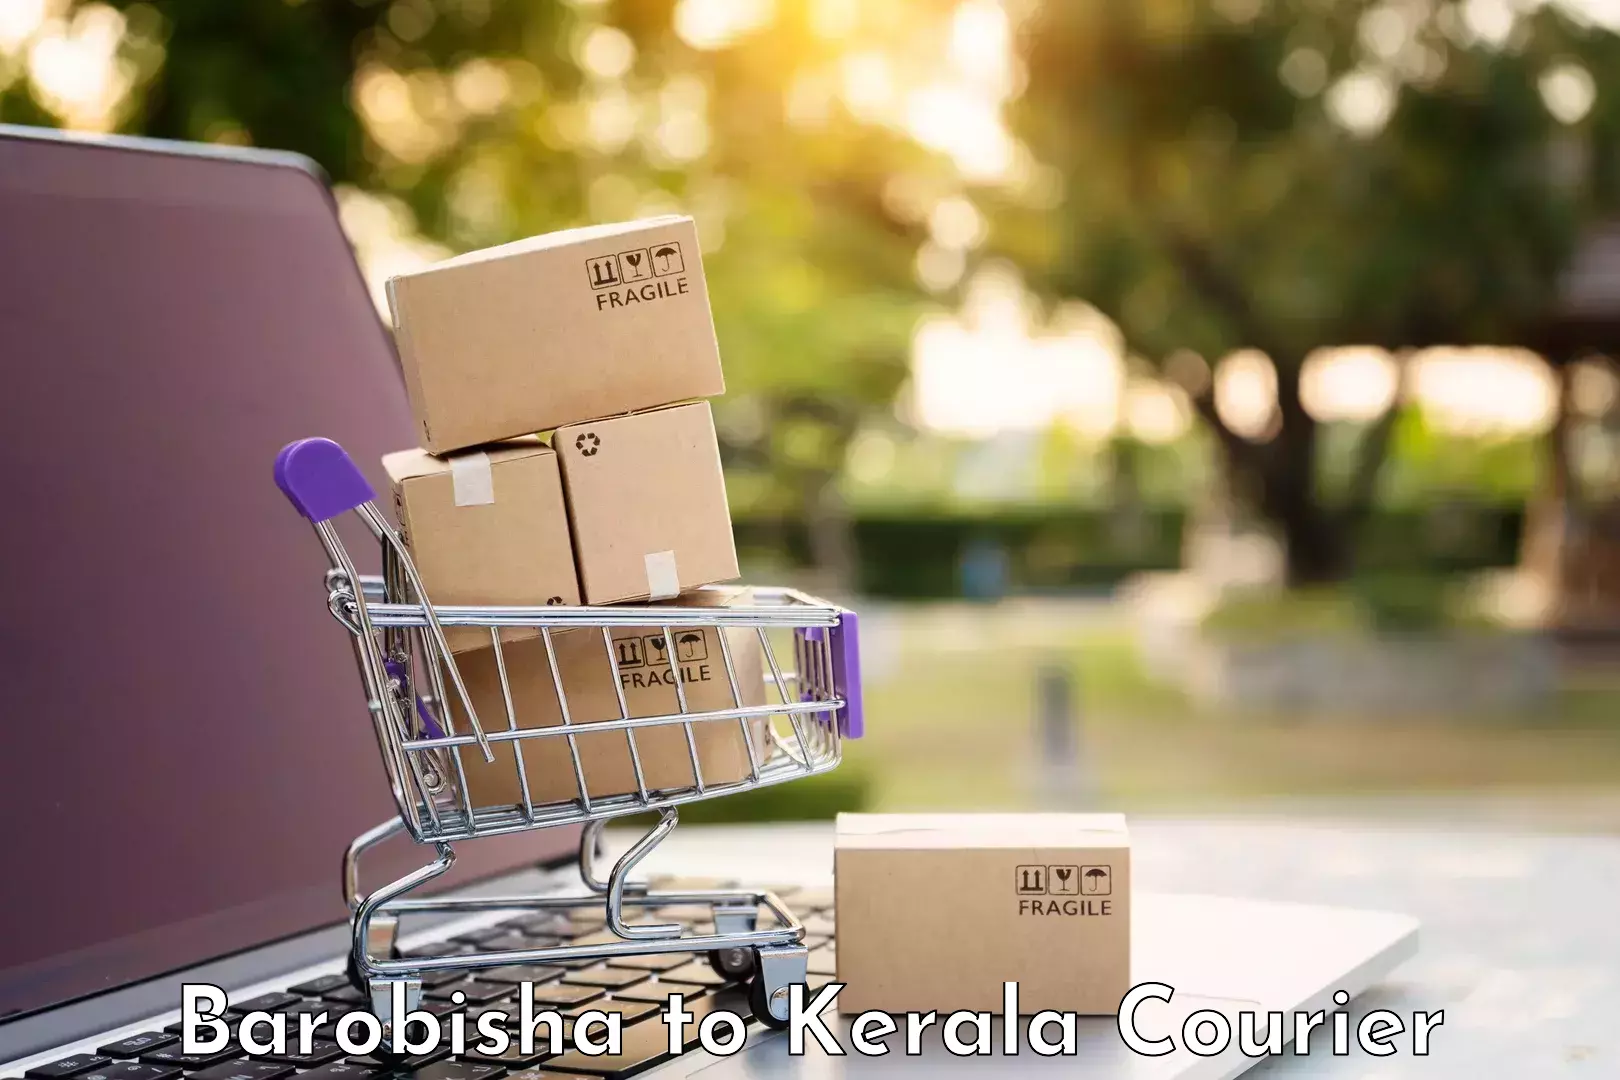 Doorstep luggage pickup Barobisha to Kerala